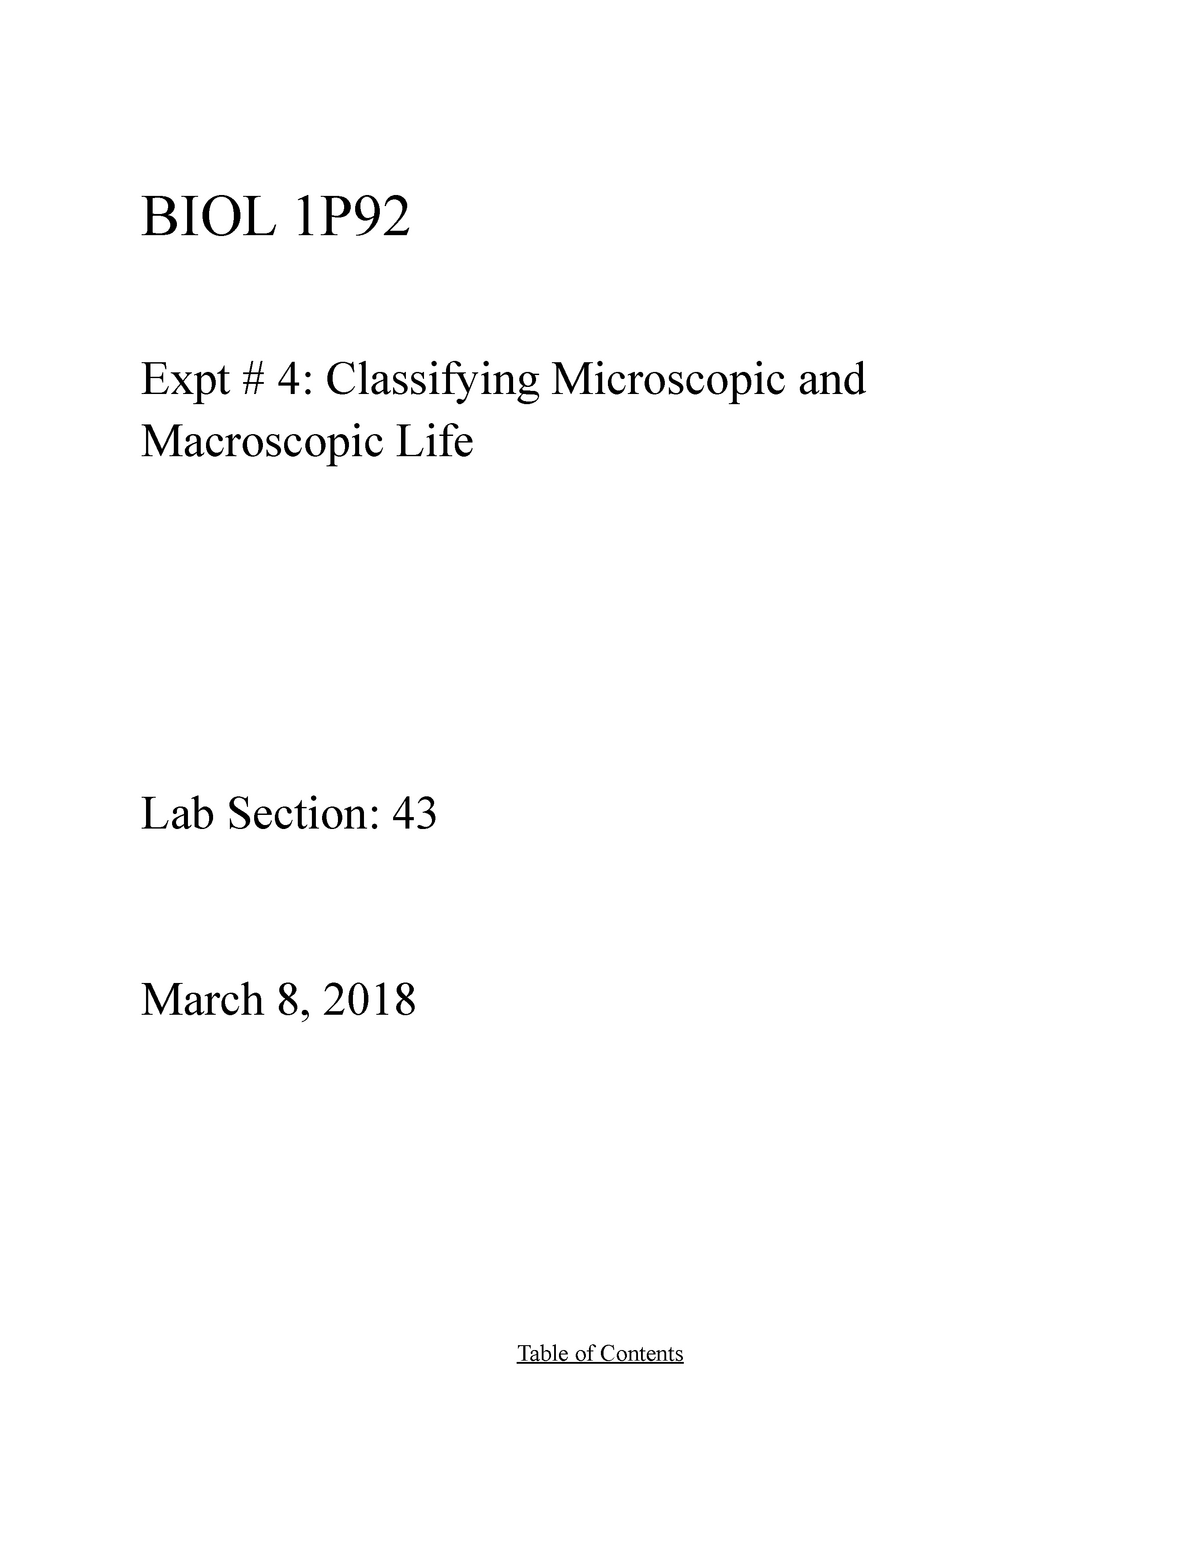 biol 133 lab assignment 3